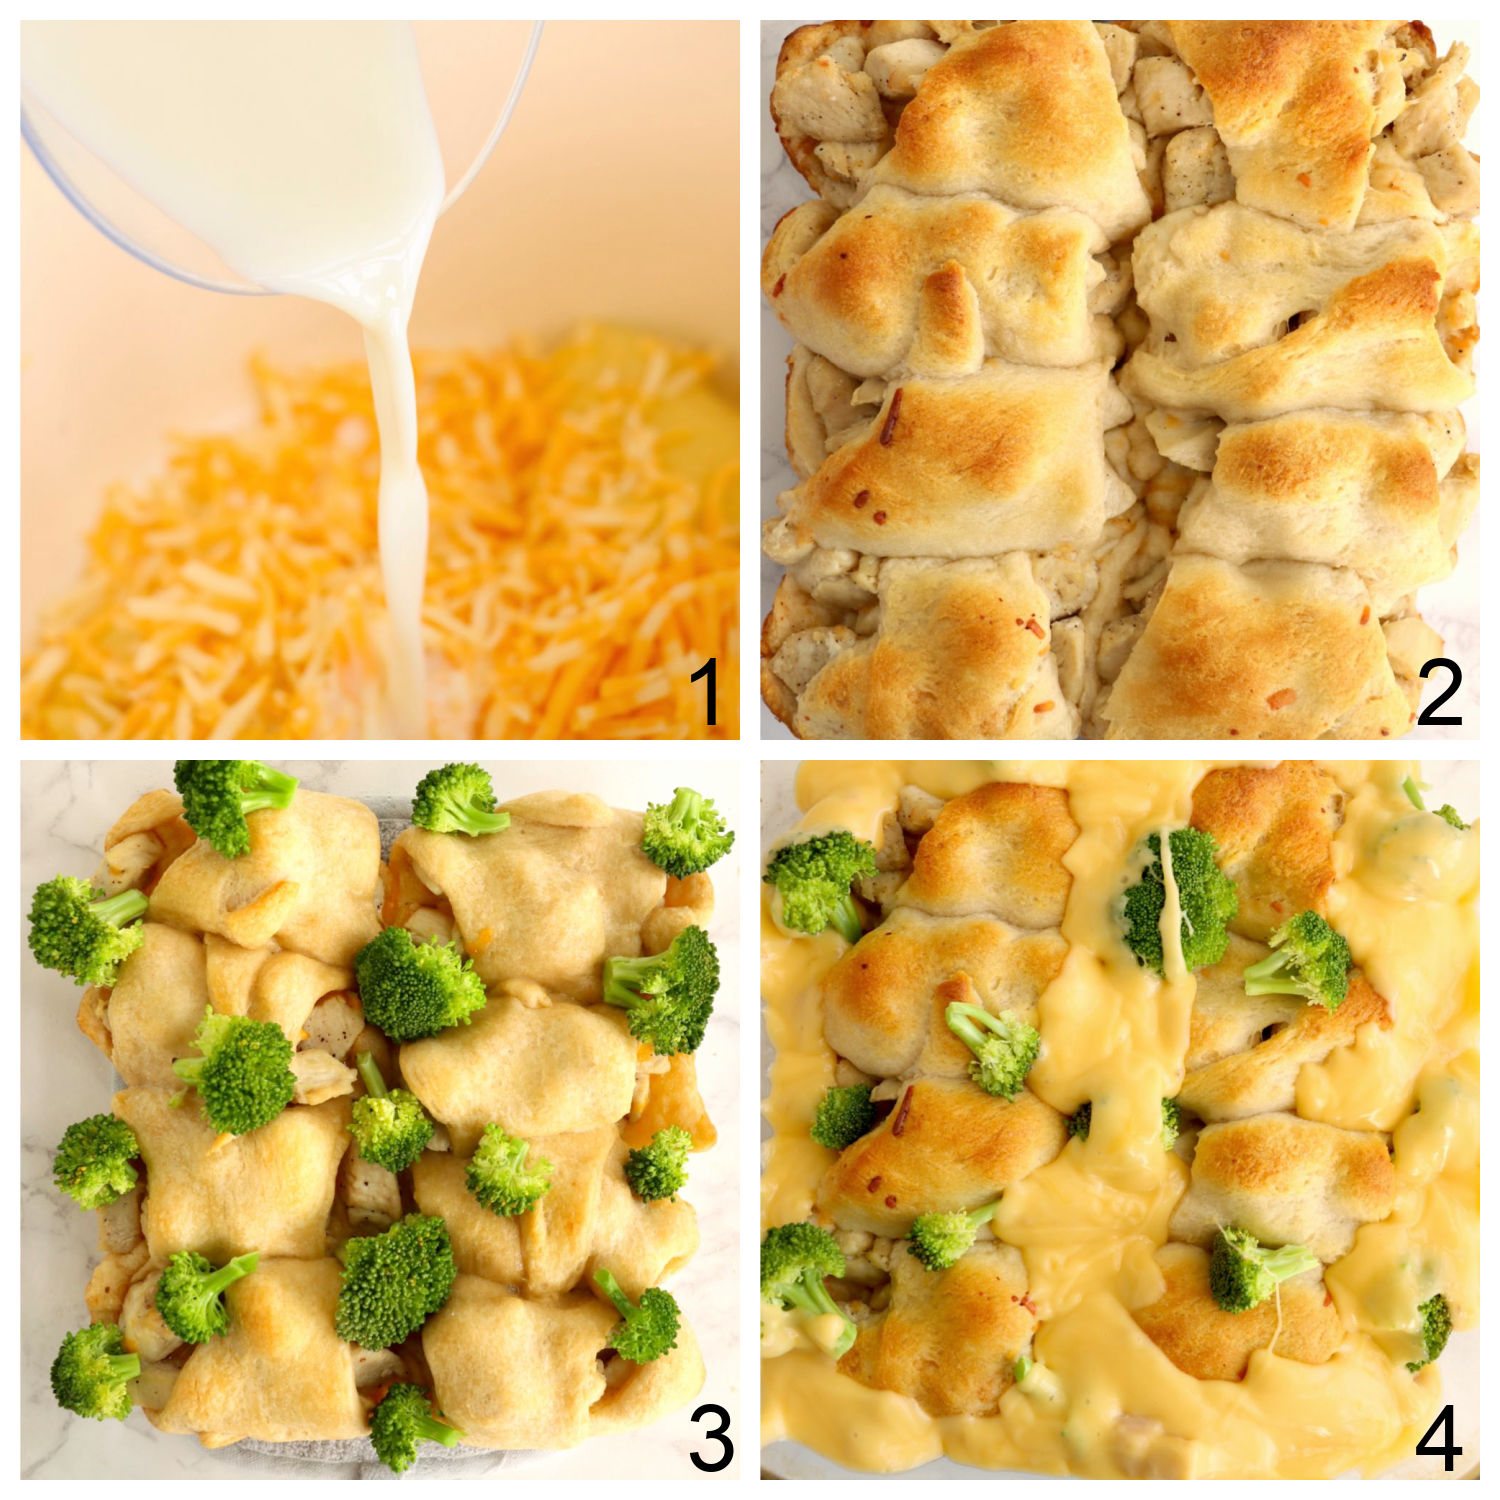 Steps for baking a chicken broccoli casserole